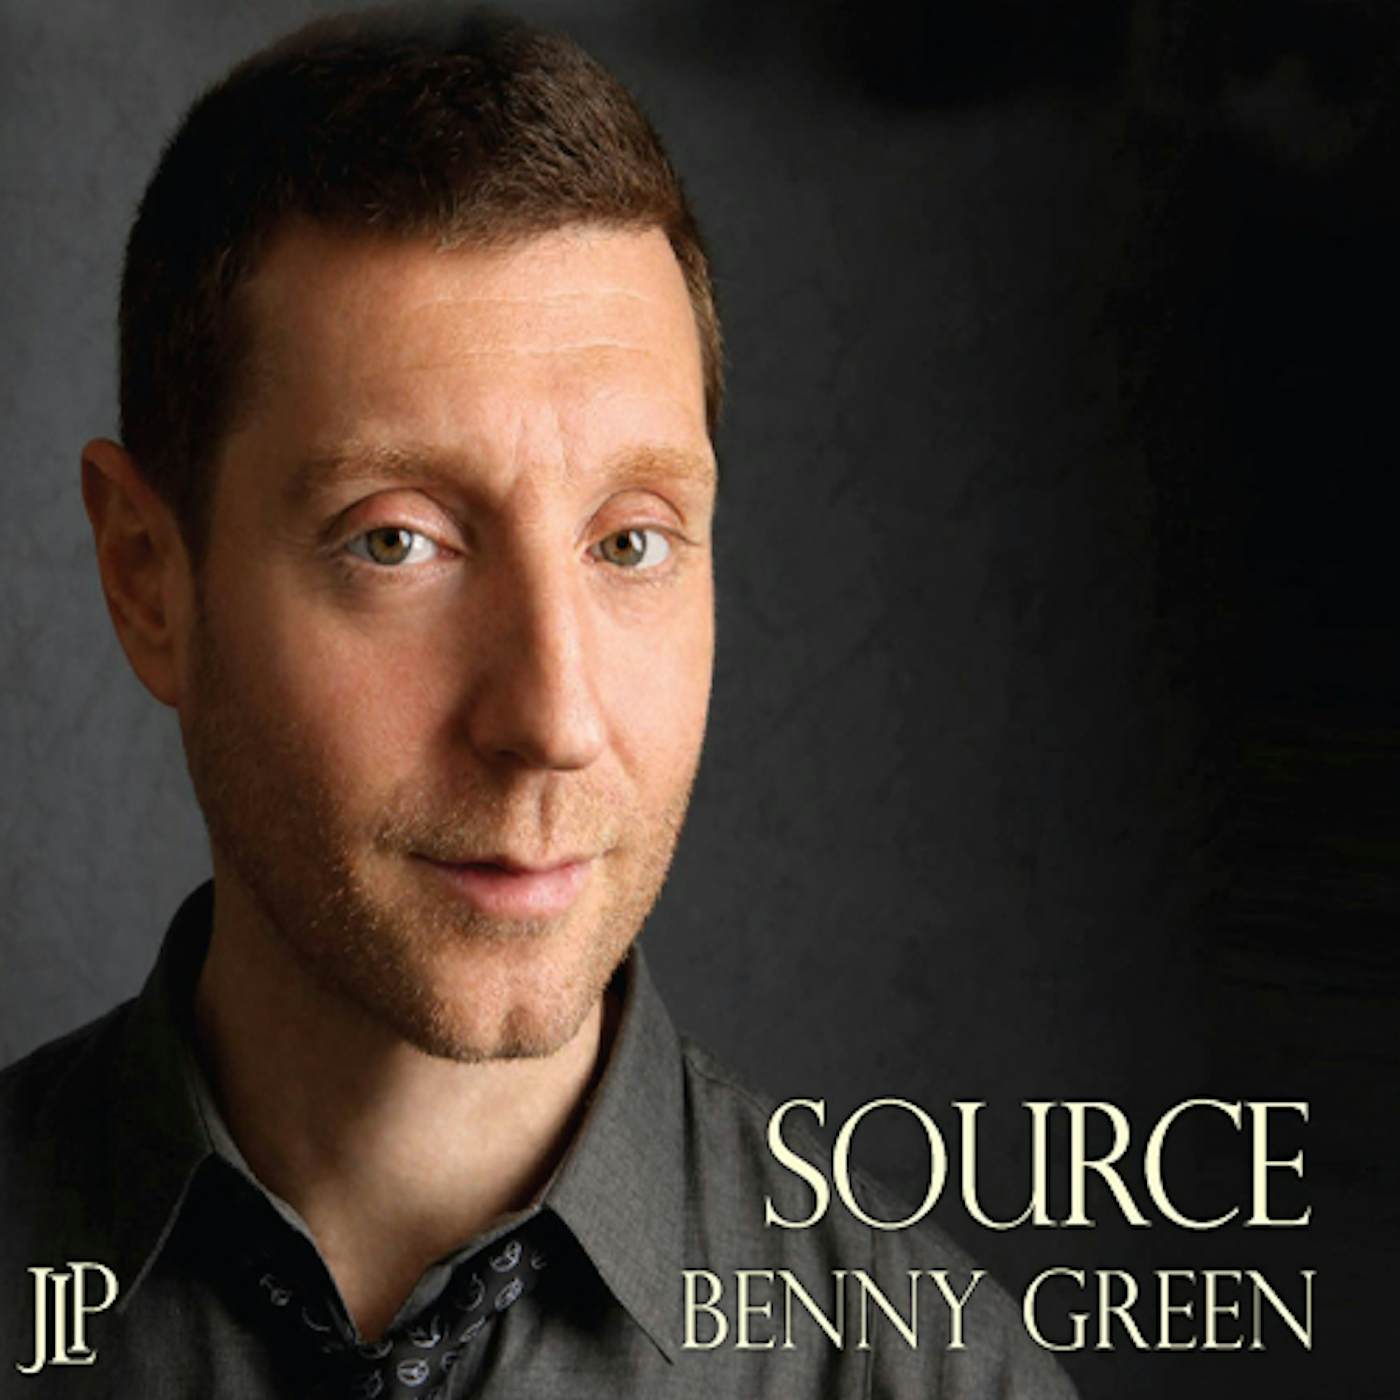 Benny Green SOURCE CD